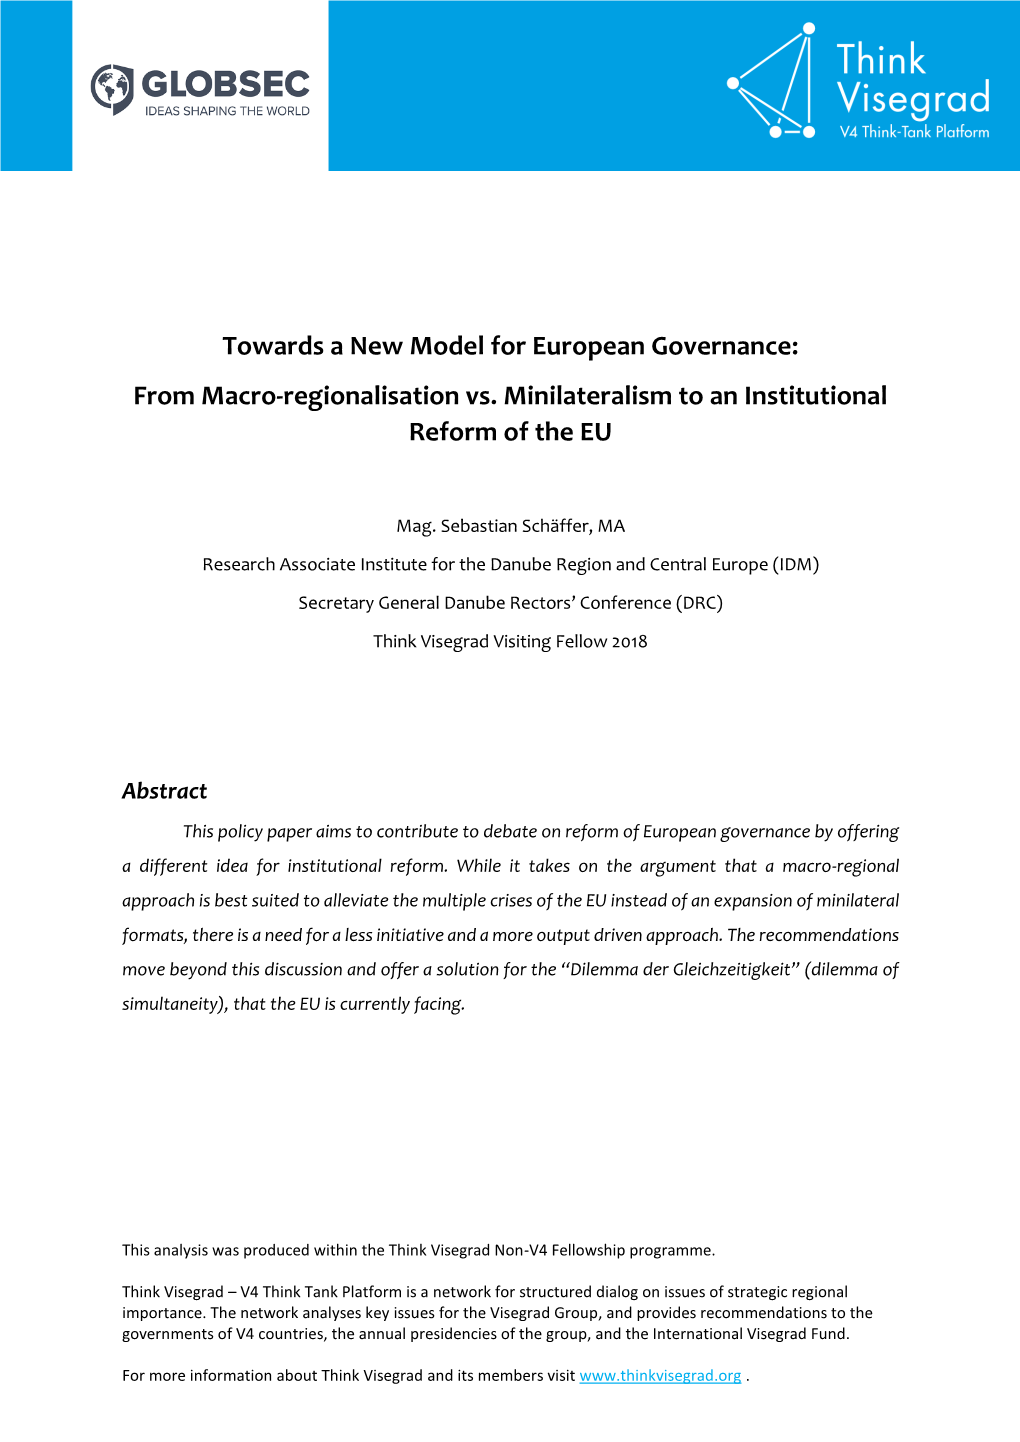 Towards a New Model for European Governance: from Macro-Regionalisation Vs